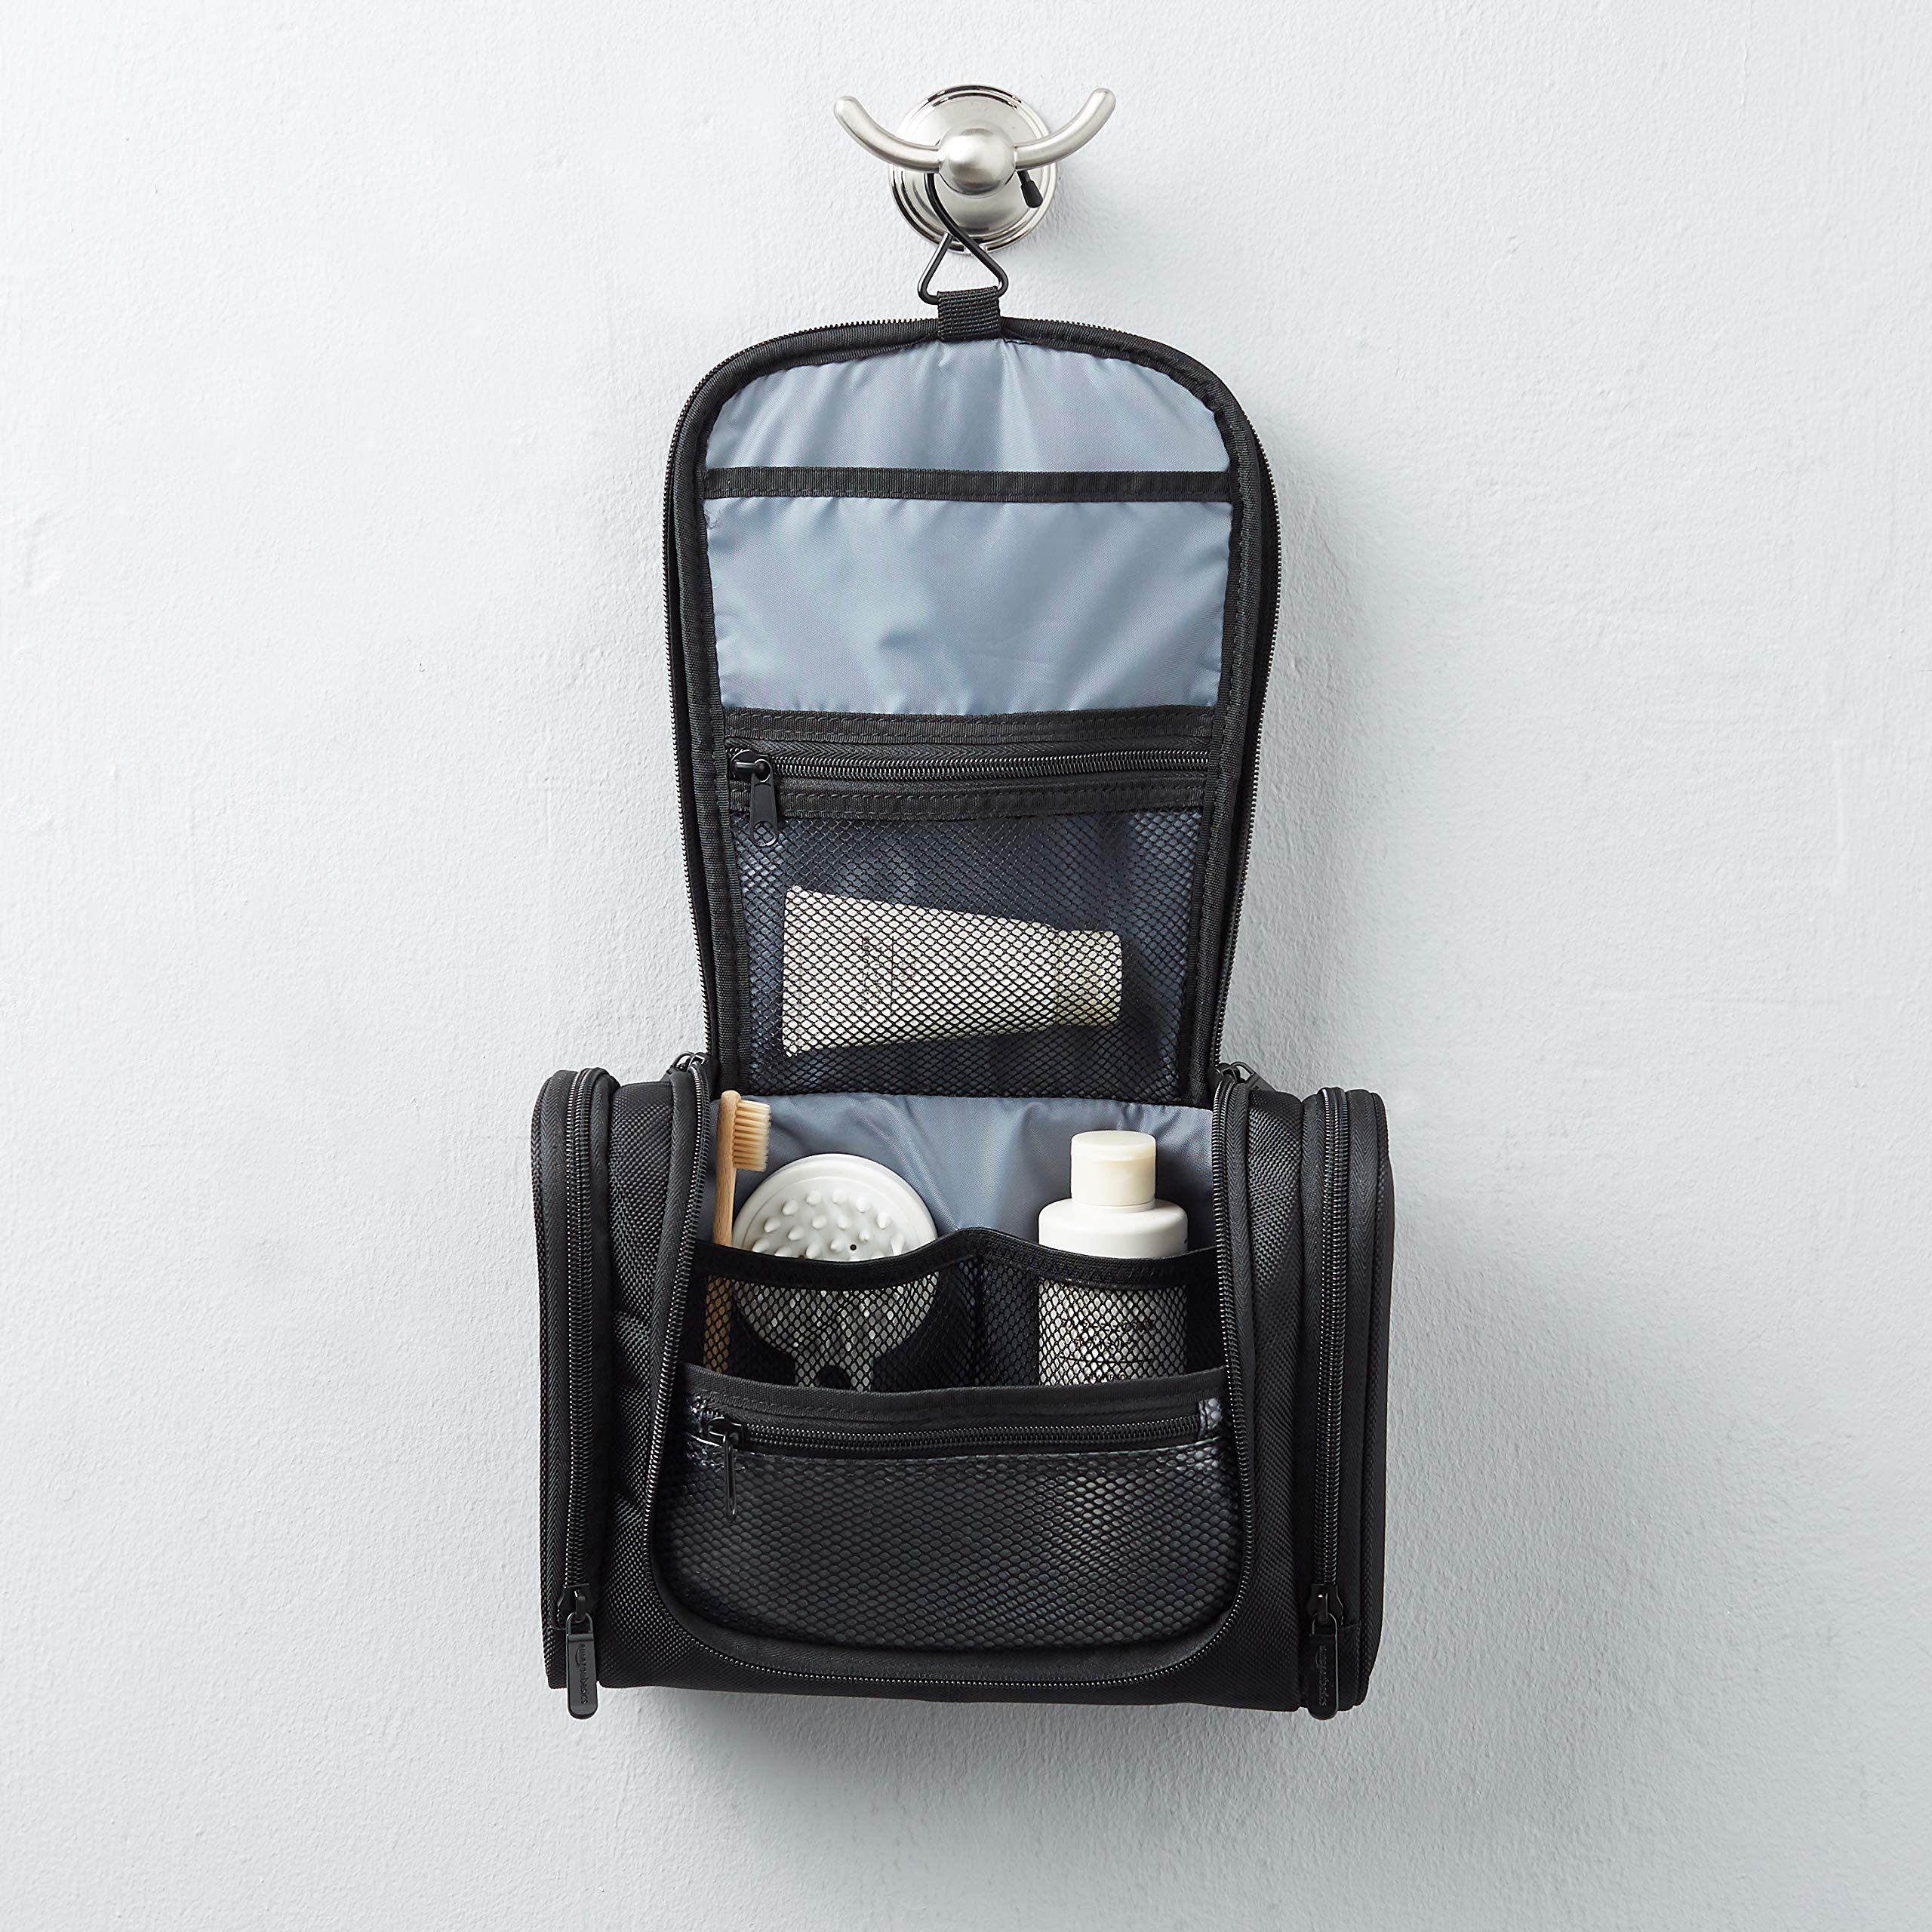 Amazon Basics Hanging, Travel Toiletry Bag Organizer, Shower Dopp Kit, Black